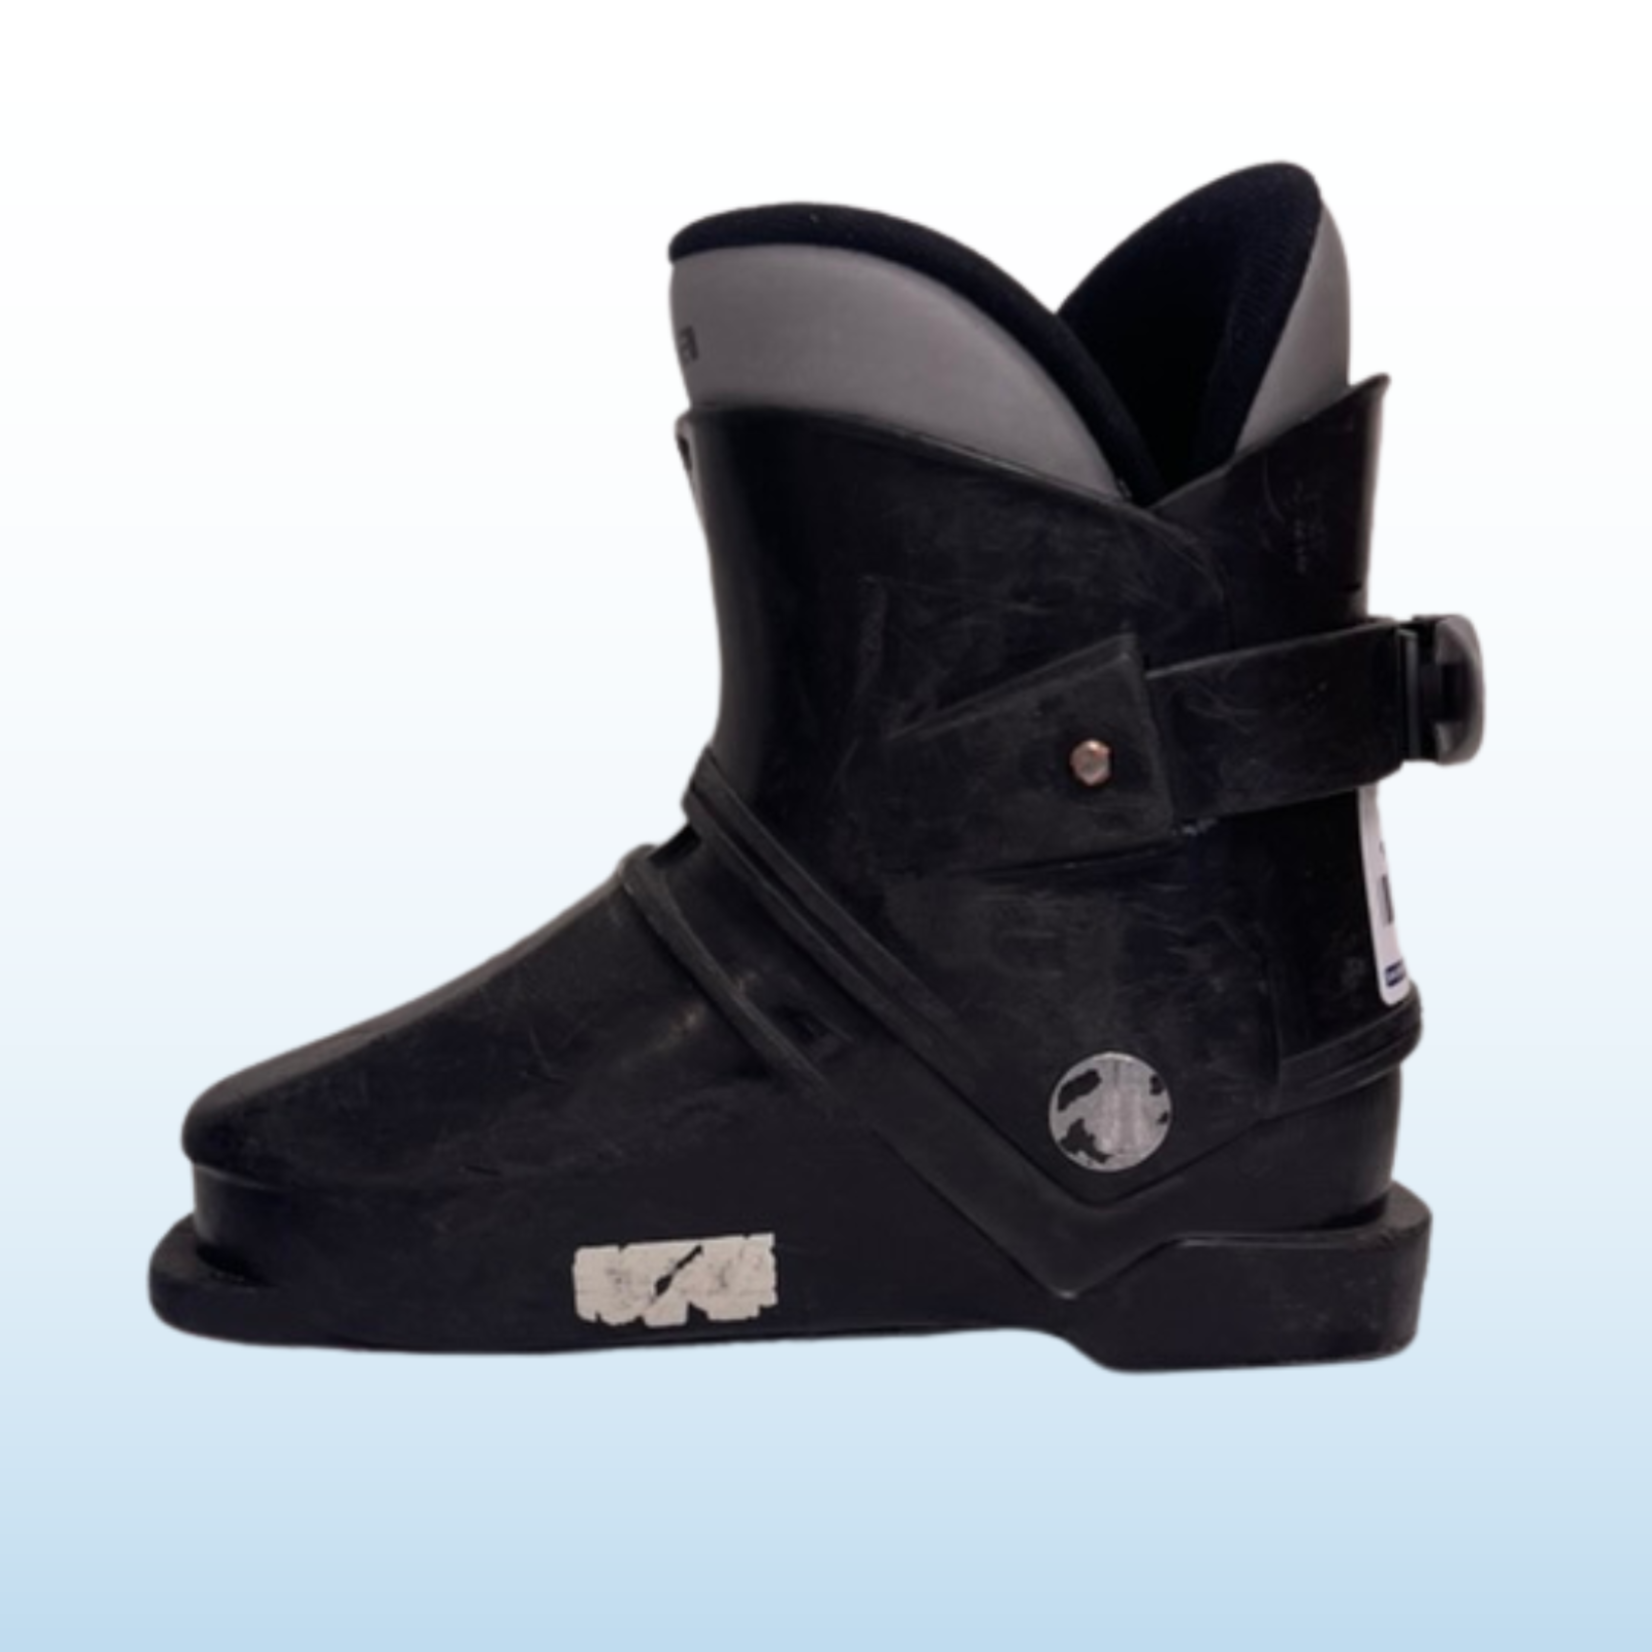 Alpina Alpina Kids Boots, Size 17.5